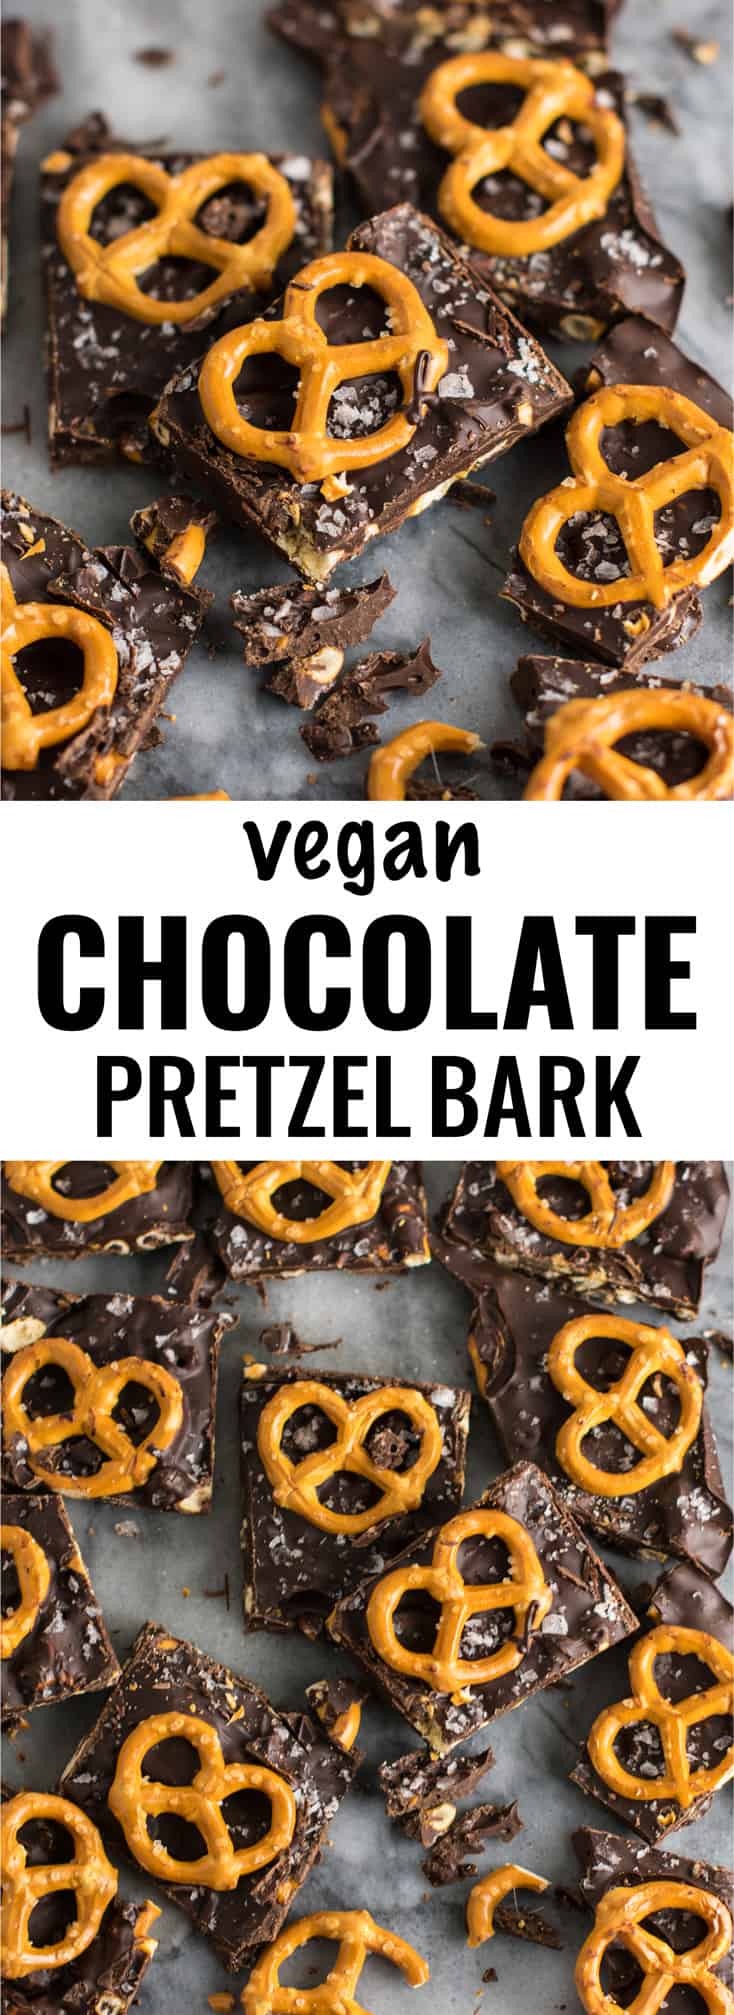 Vegan Chocolate Sea Salt Pretzel Bark Recipe (gluten free.) An indulgent healthy dessert that is so addicting! #vegan #veganpretzelbark #dessert #chocolate #healthy #vegandessert